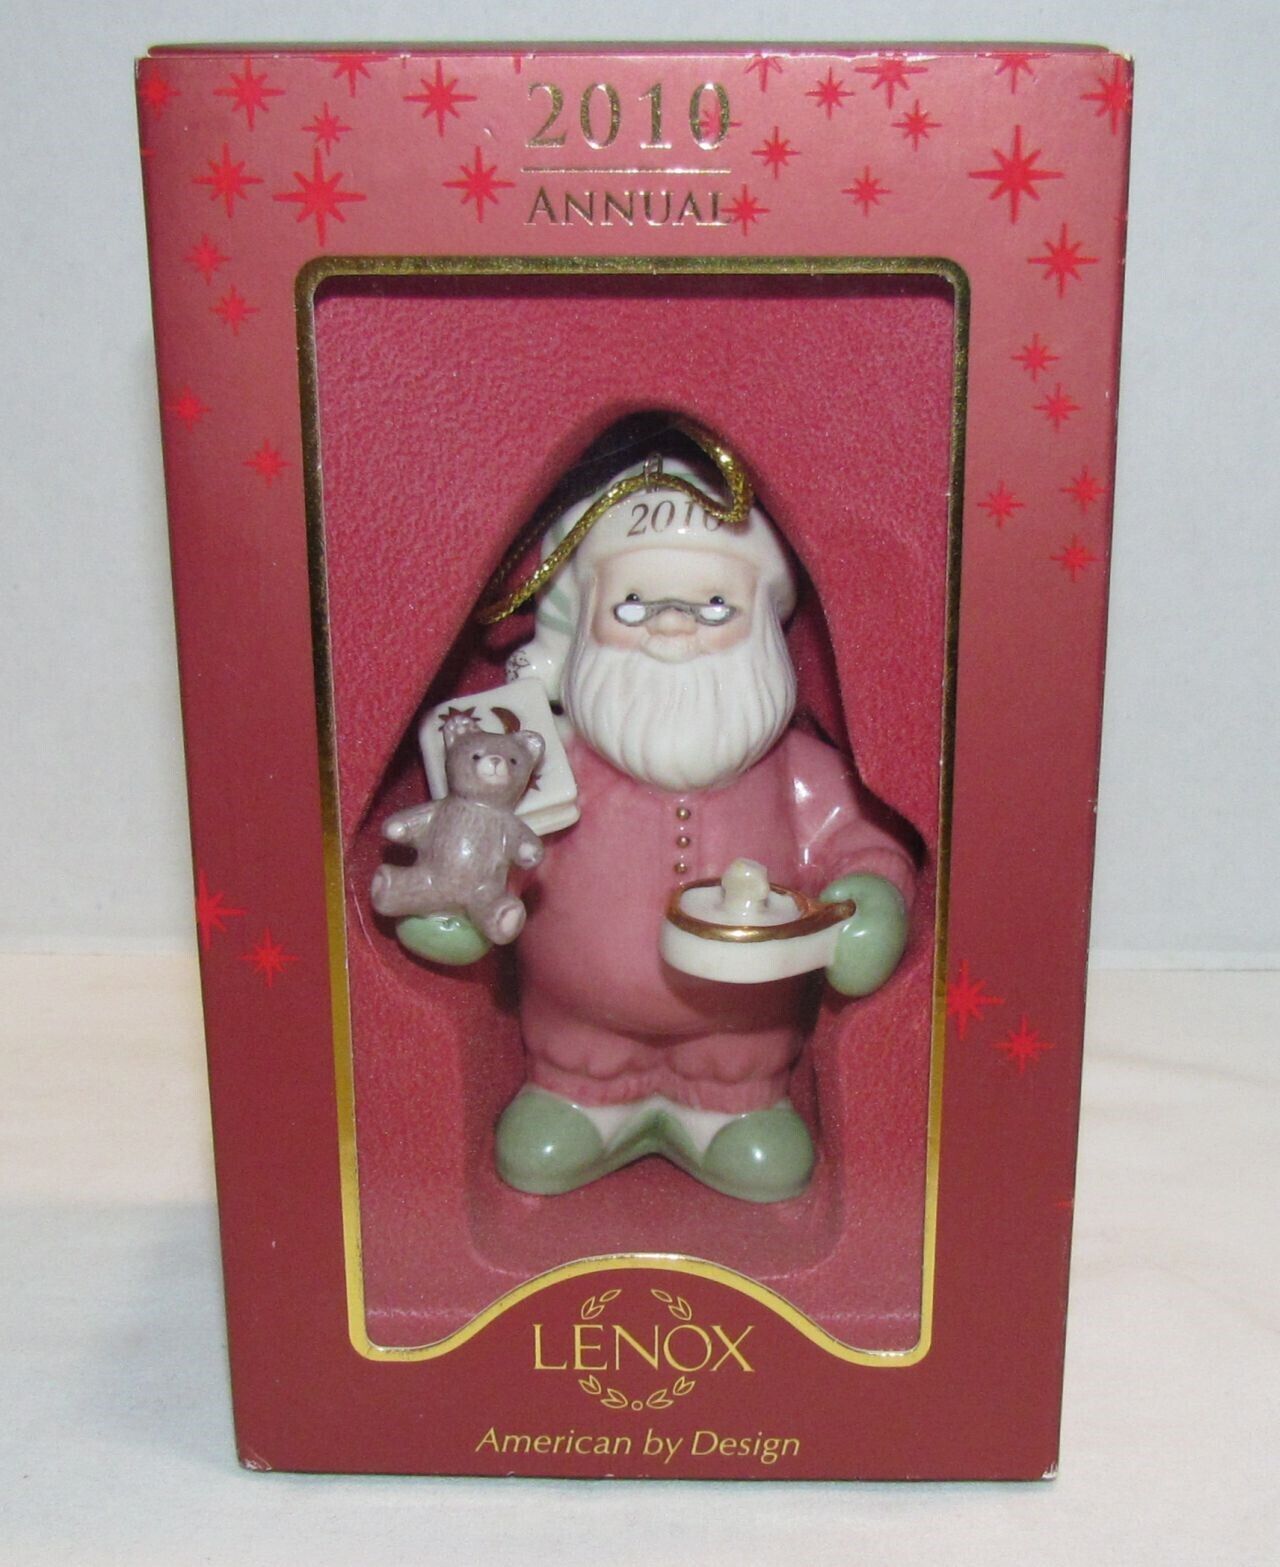 Lenox 2010 Santa's Slumber Annual Ornament, New in Box